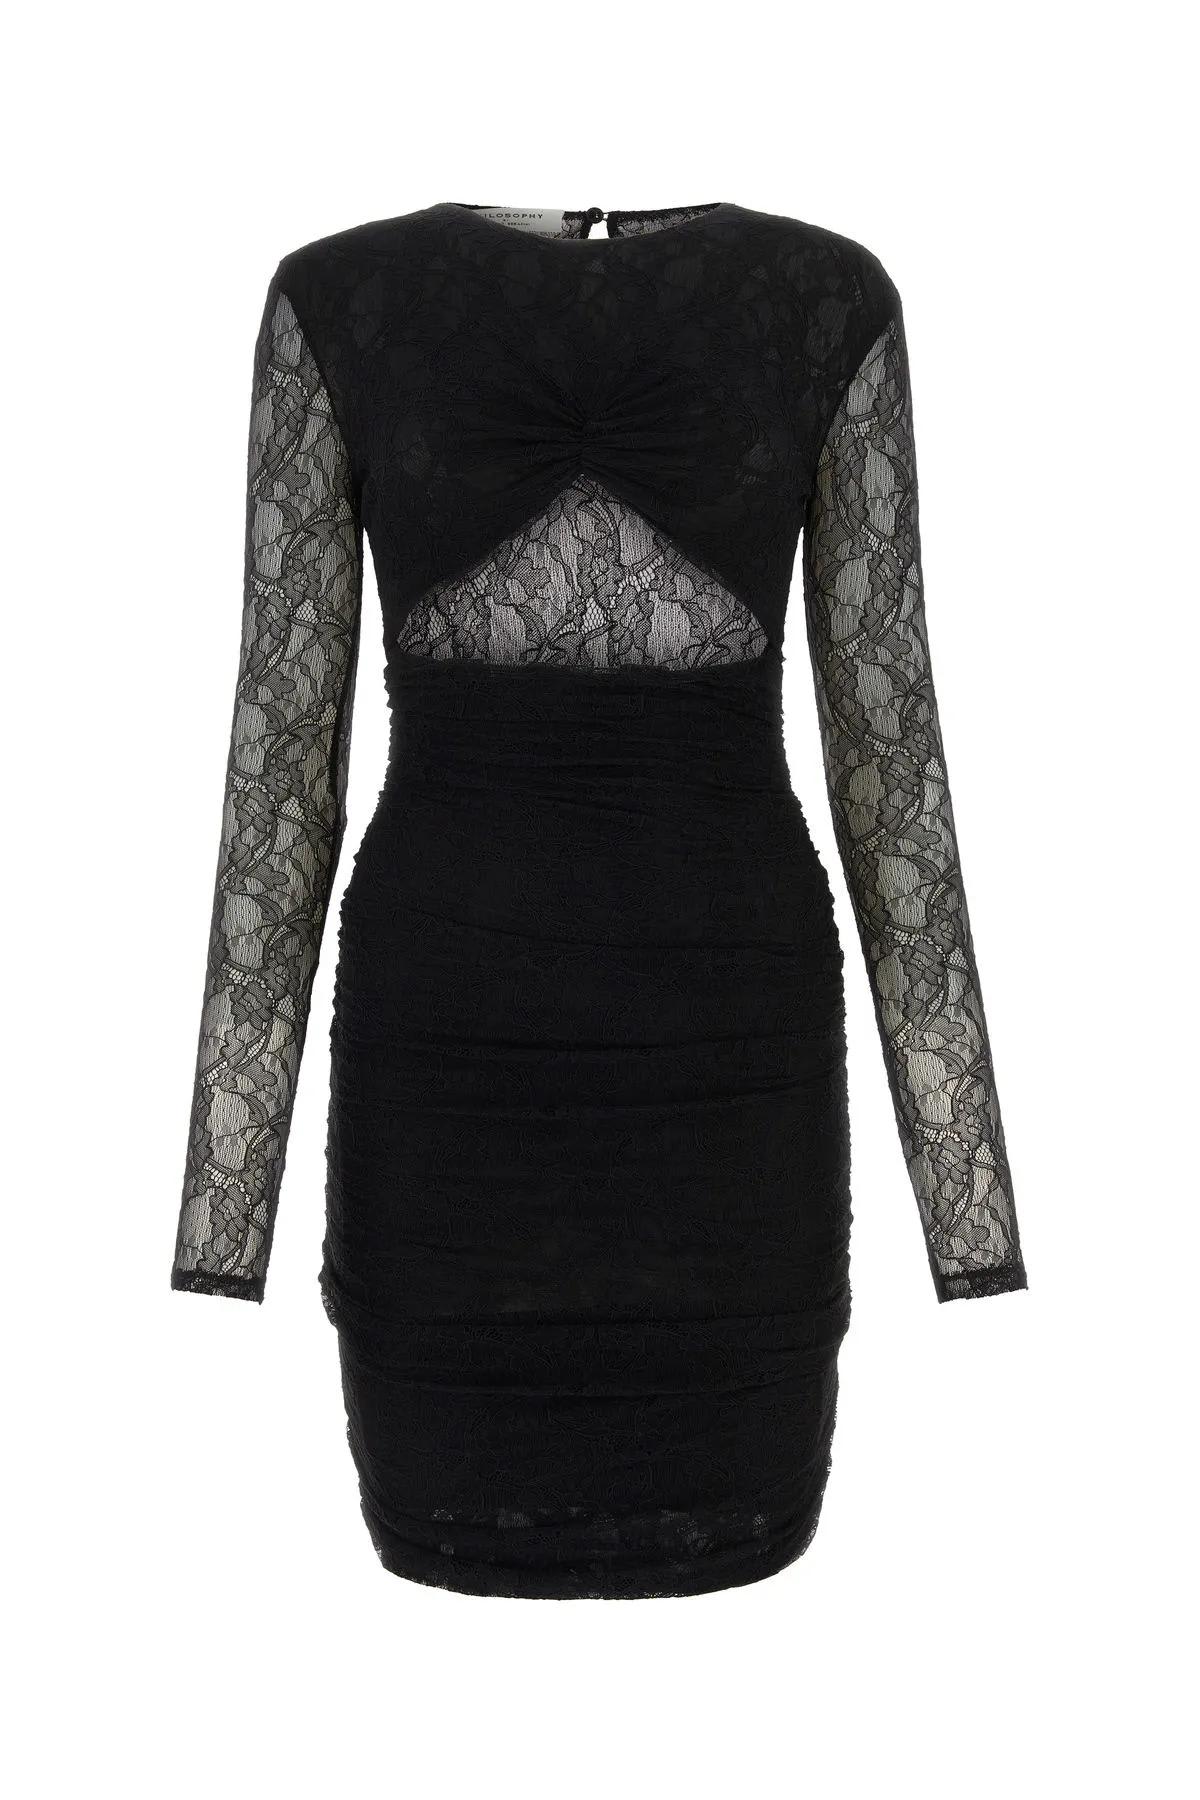 Shop Philosophy Di Lorenzo Serafini Black Lace Dress